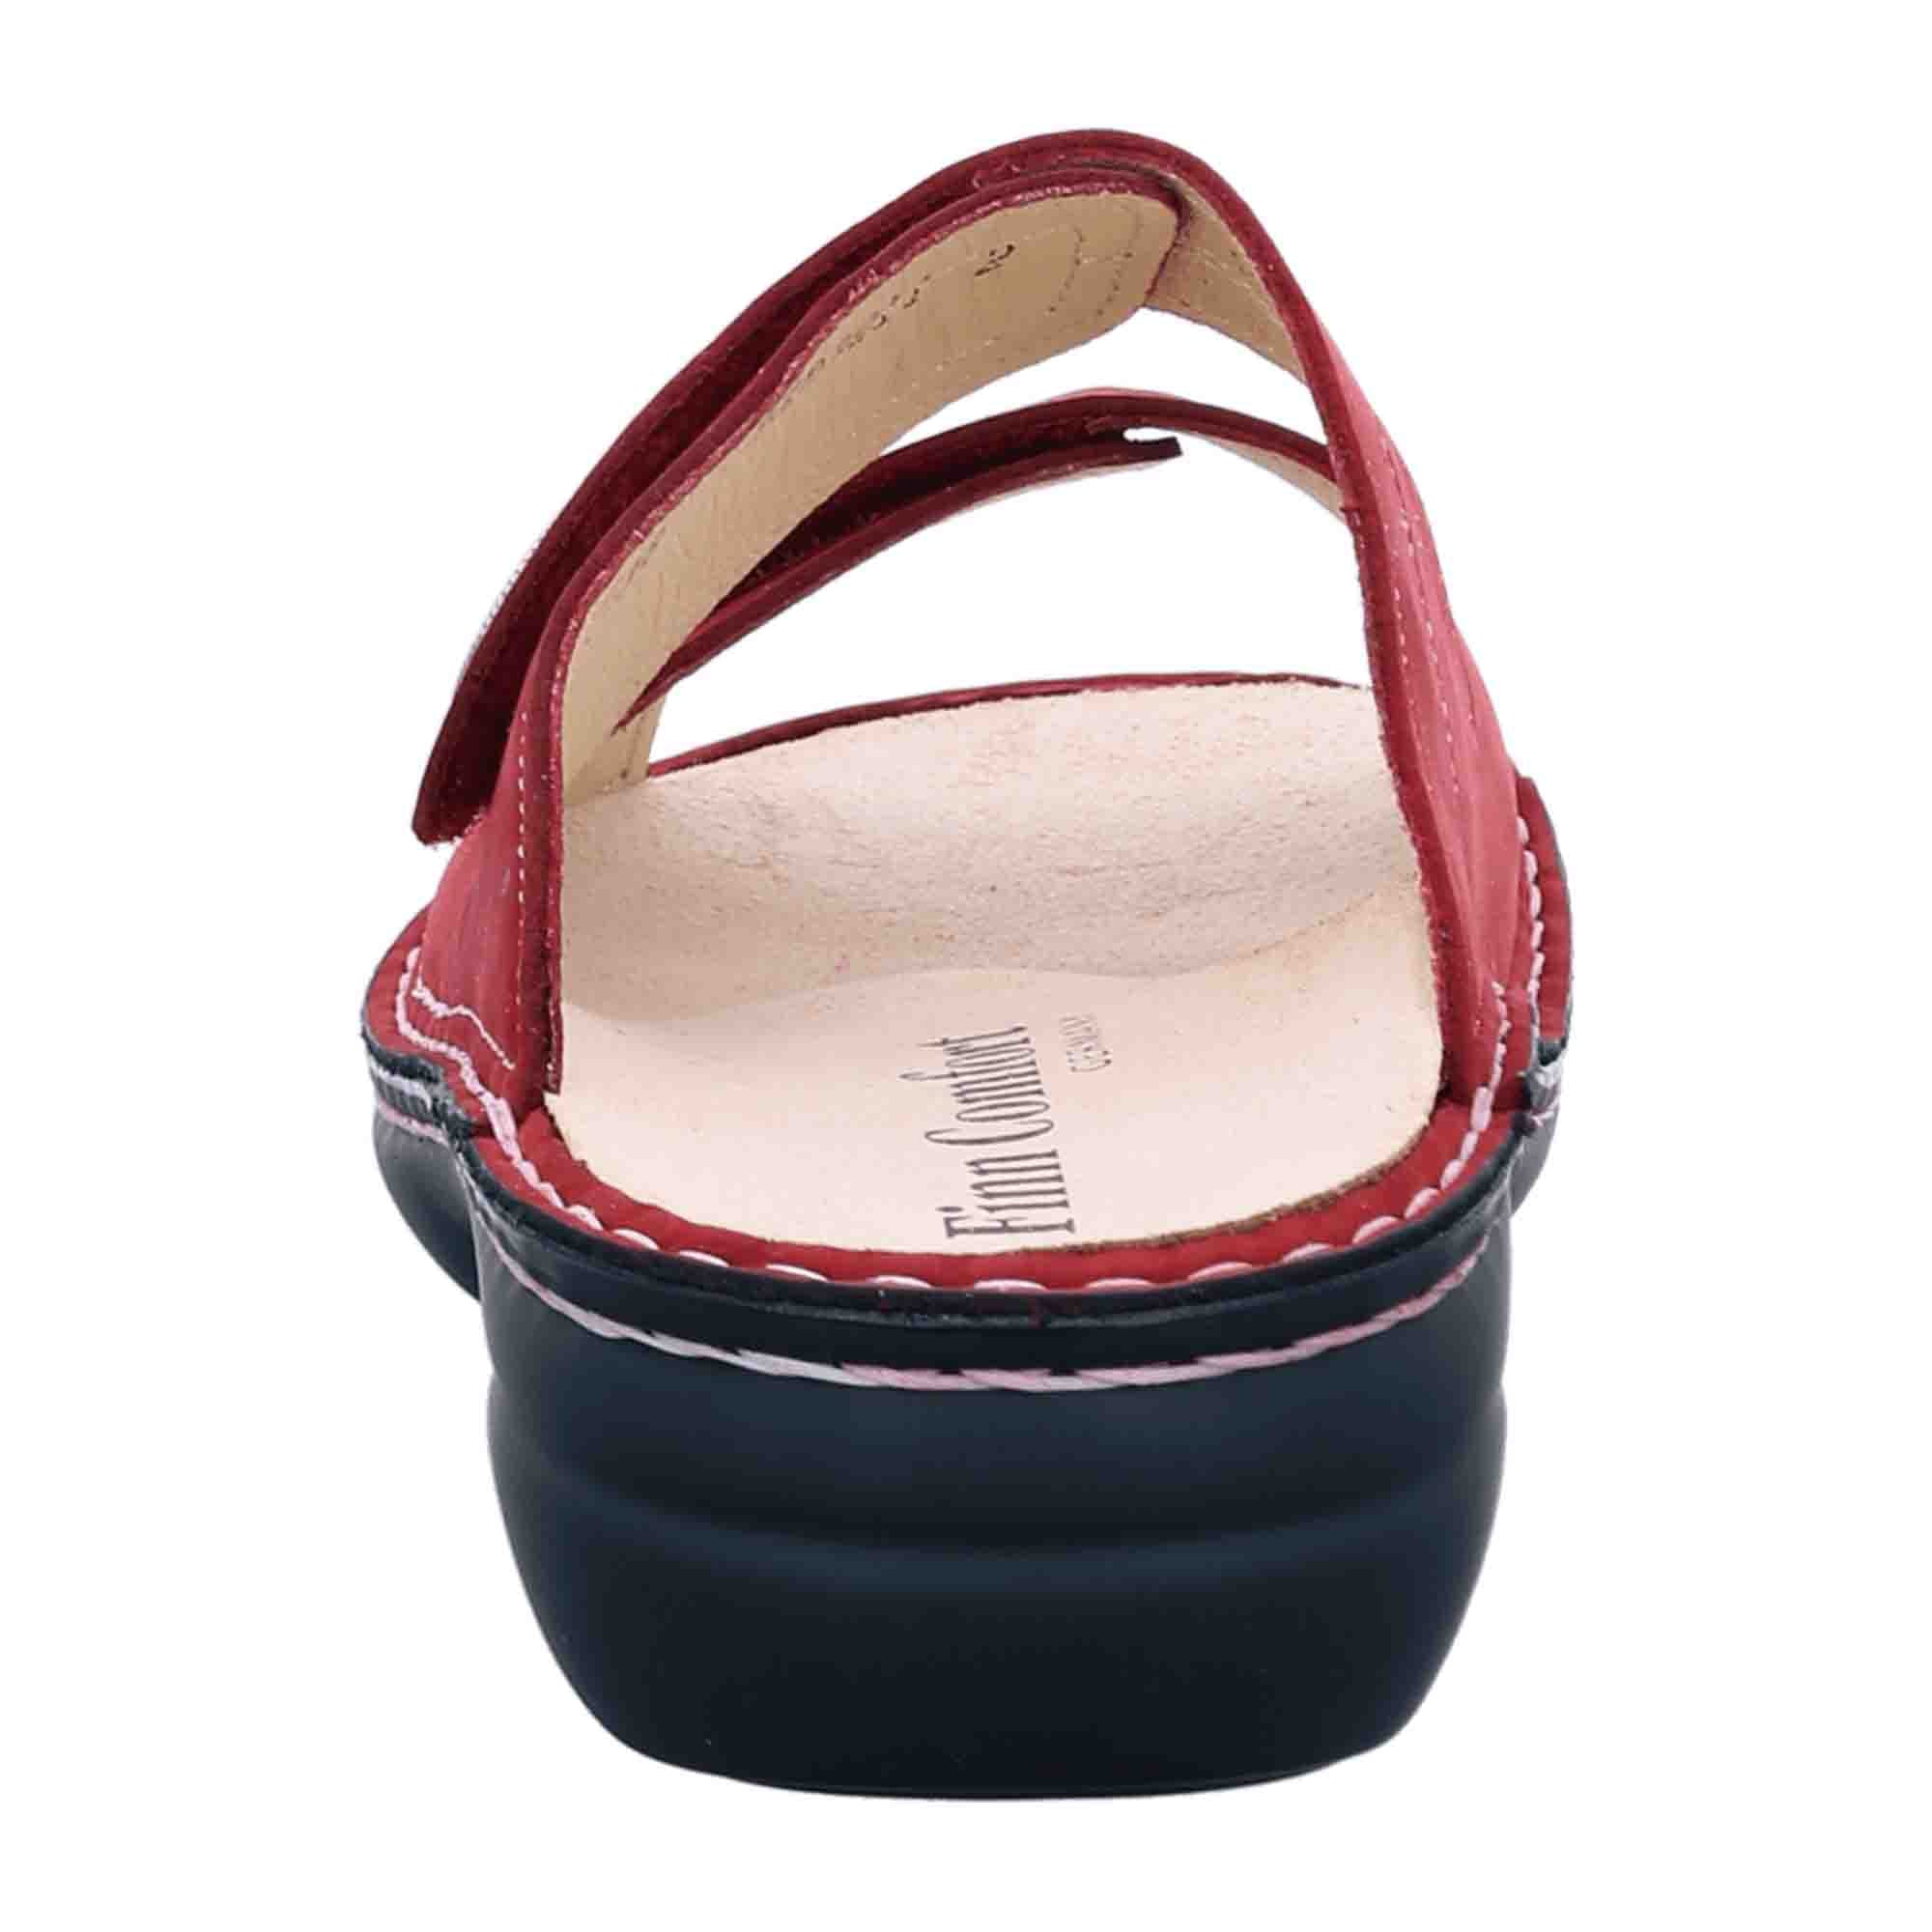 Finn Comfort Women's Red Comfort Slides - Stylish & Durable Sandals